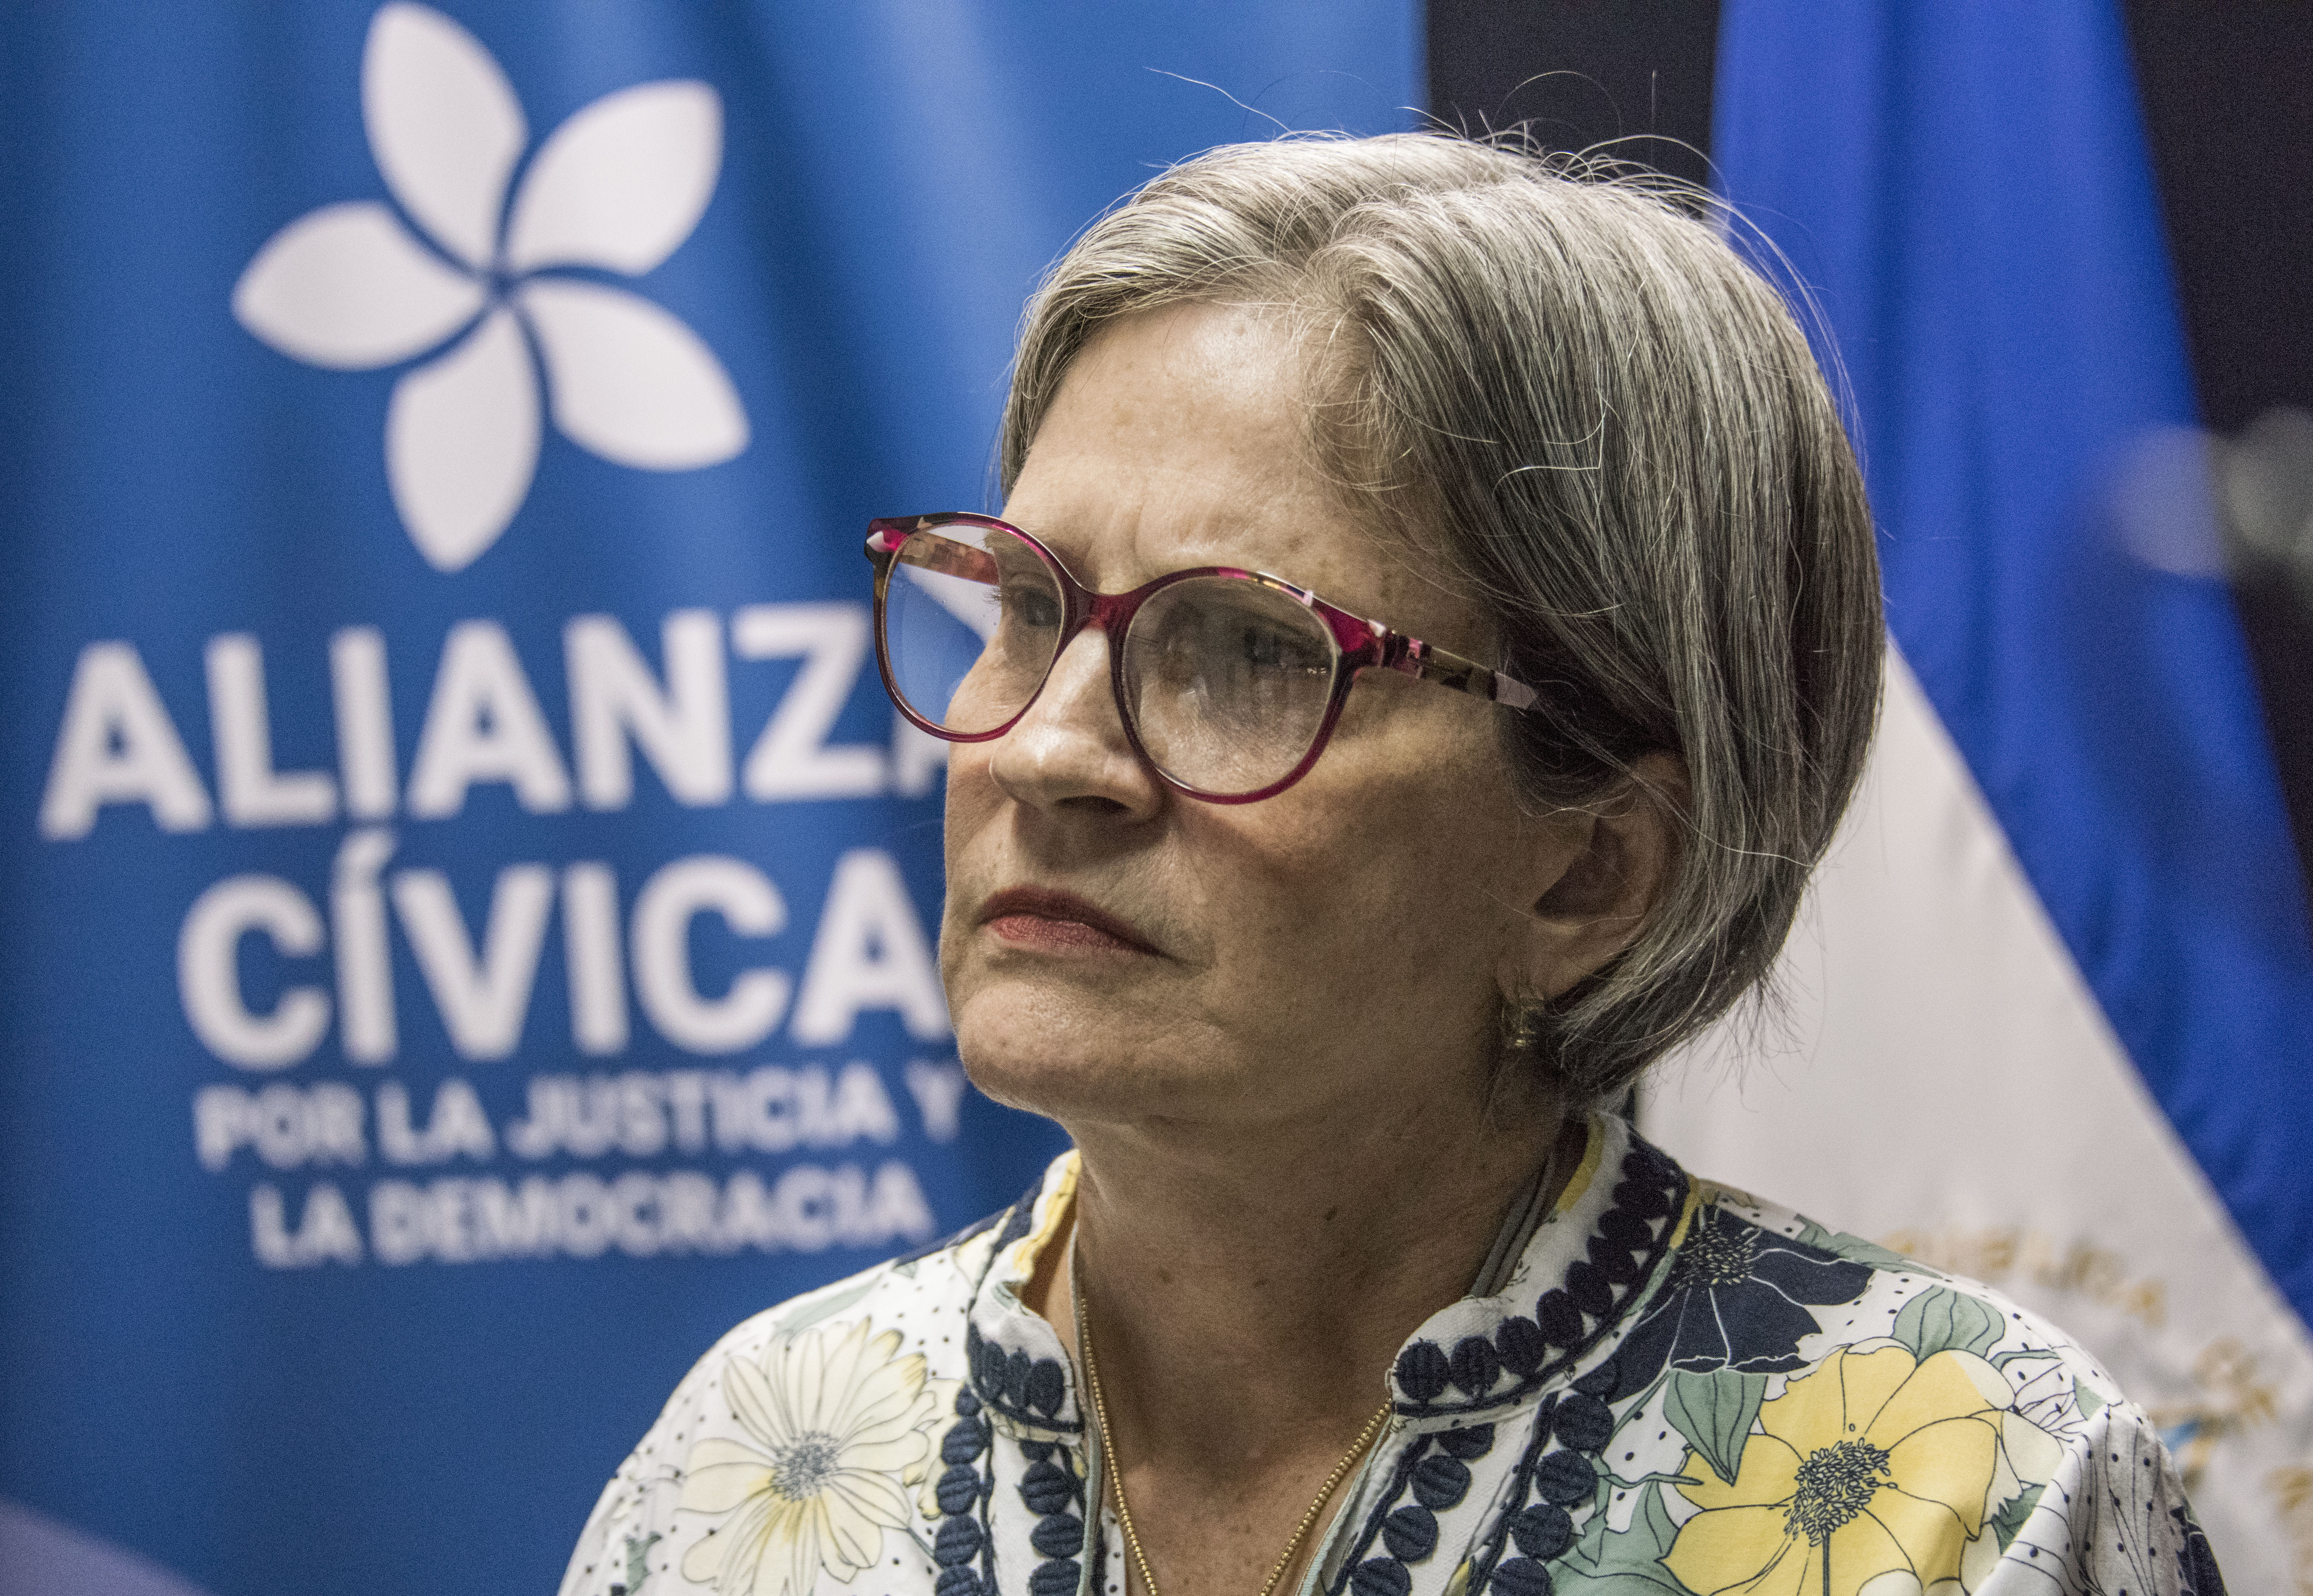 Kitty Monterrey, Head of Ciudadanos por la Libertad and Vice President of Liberal International.